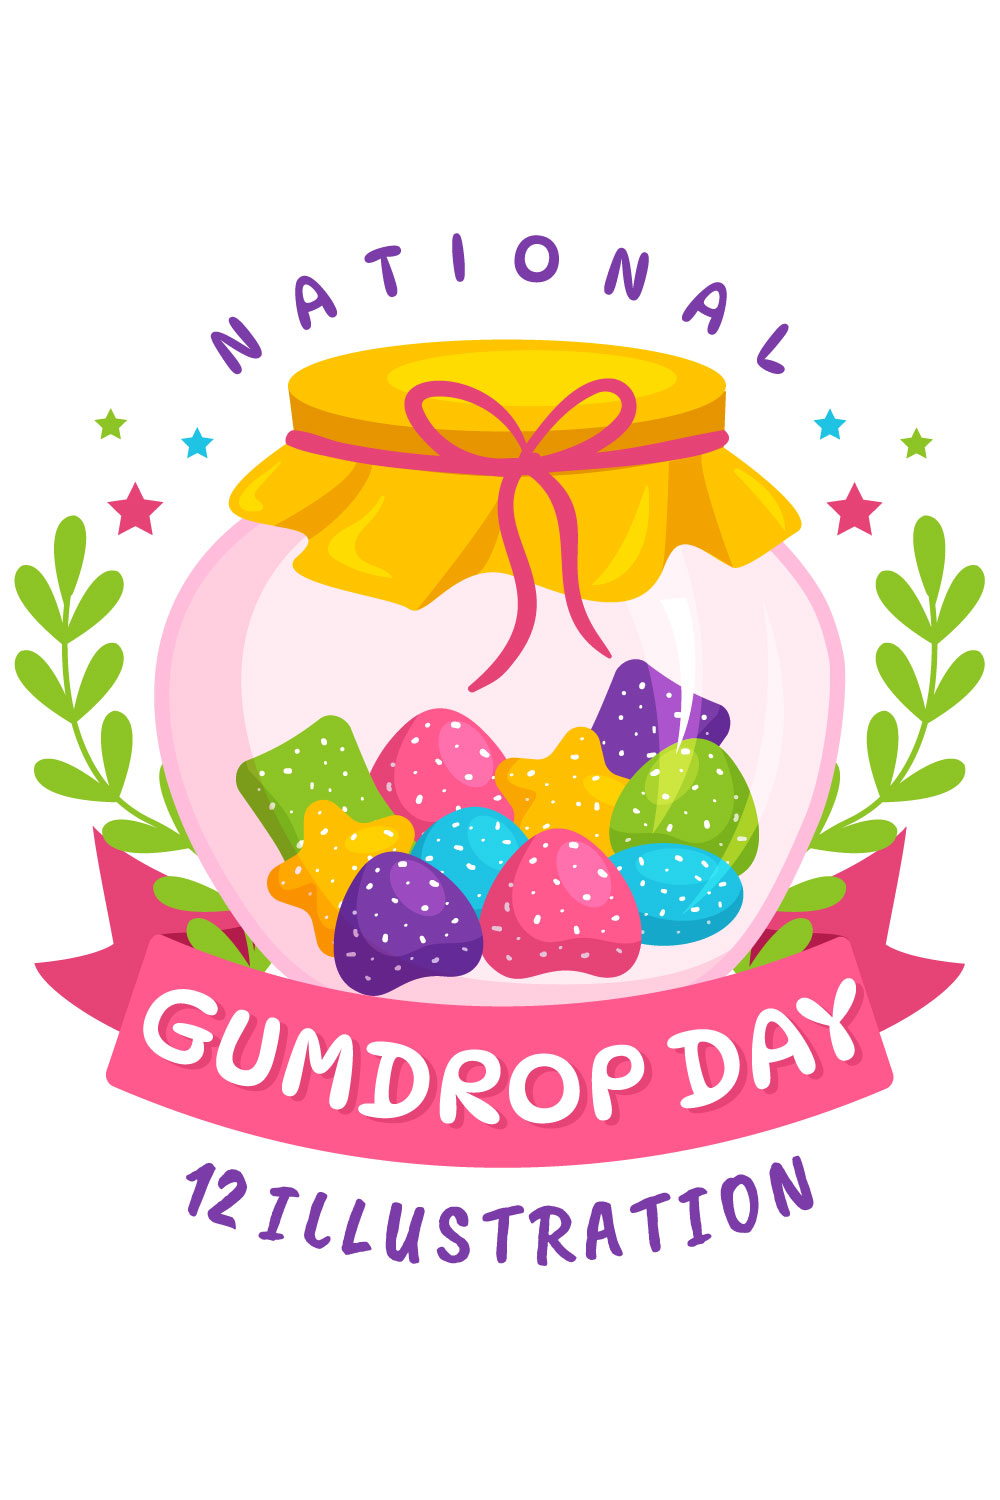 12 National Gumdrop Day Illustration pinterest preview image.